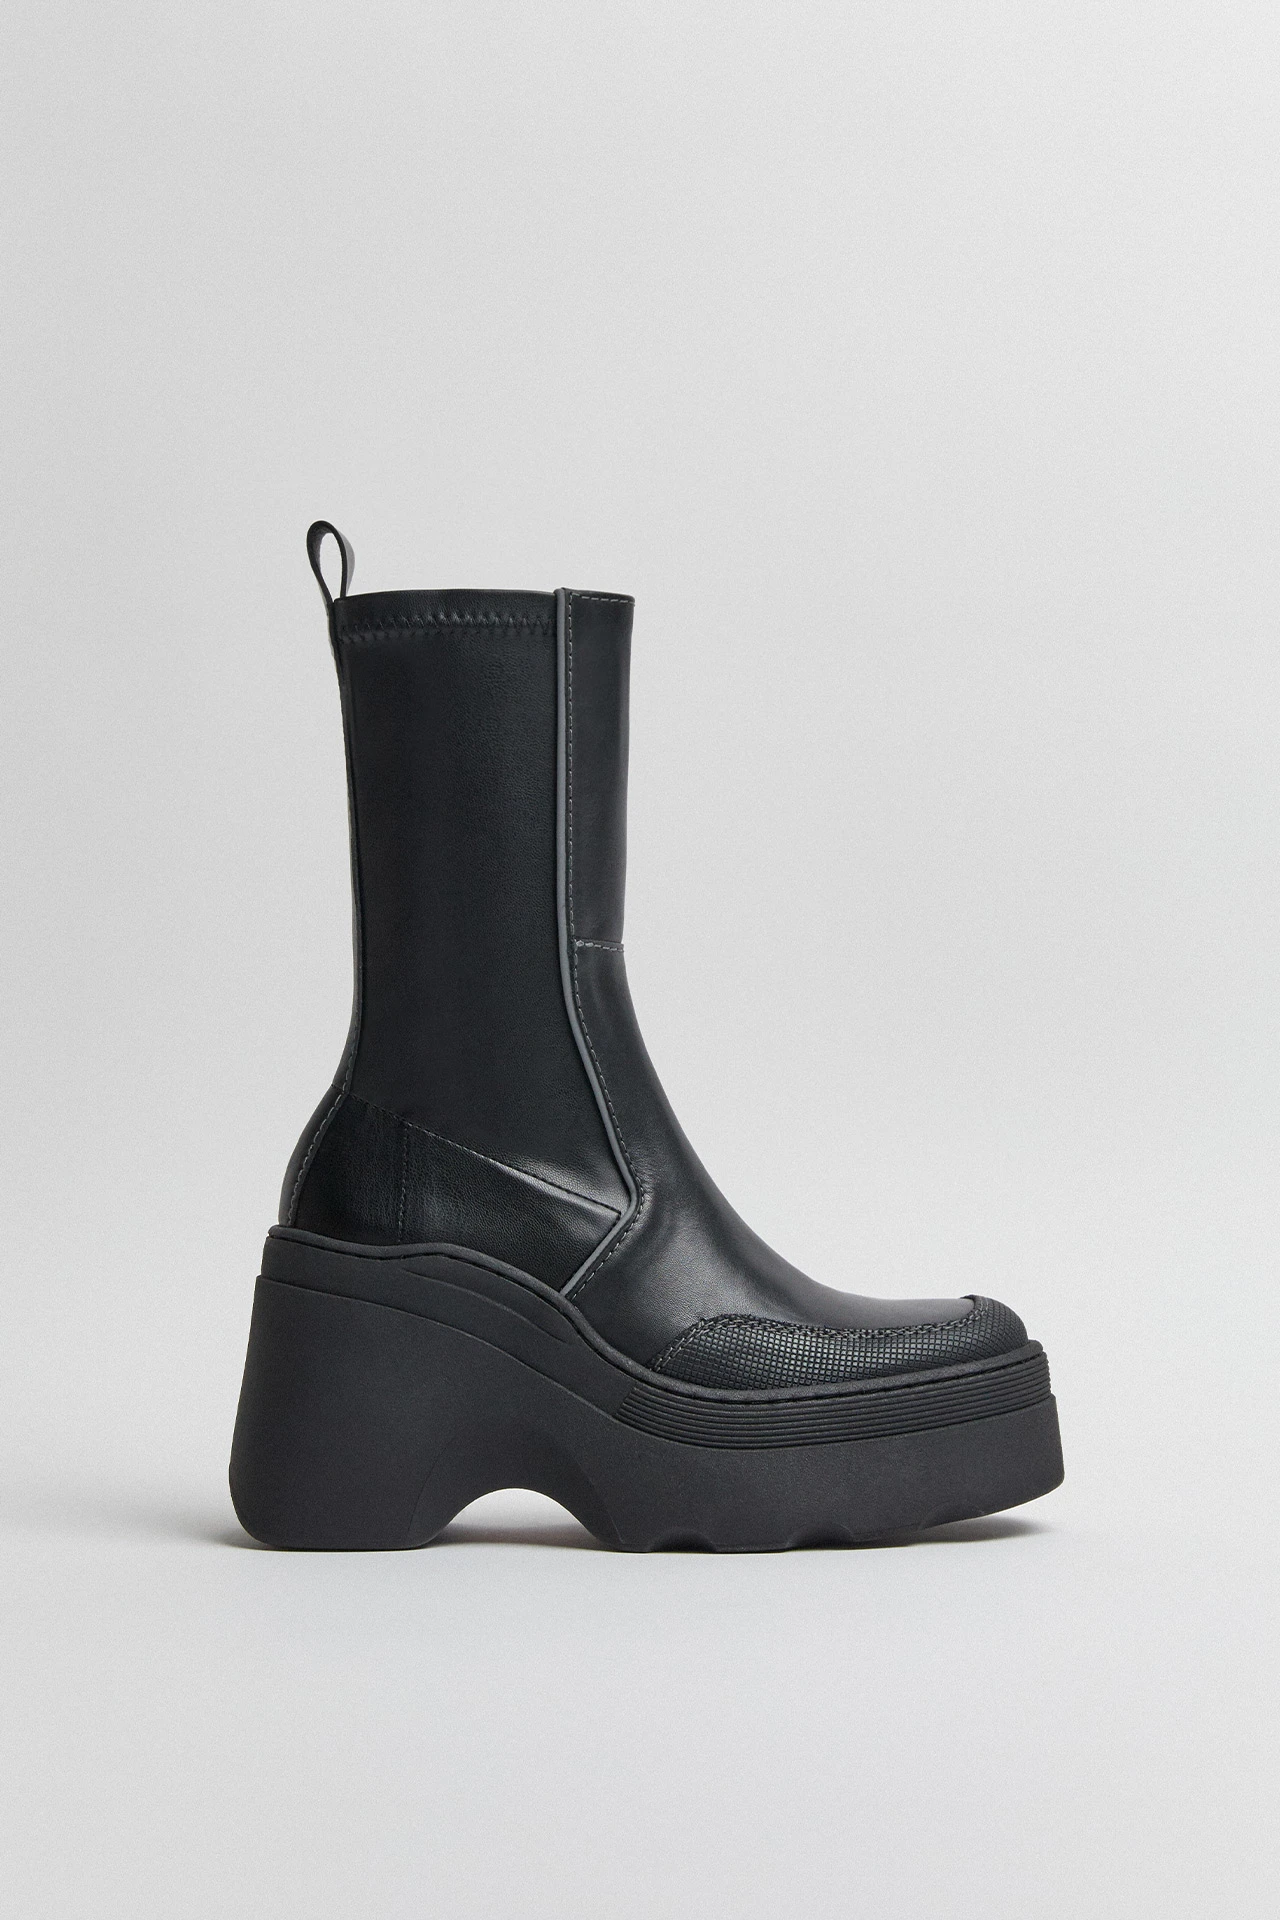 E8-deandra-black-boots-01